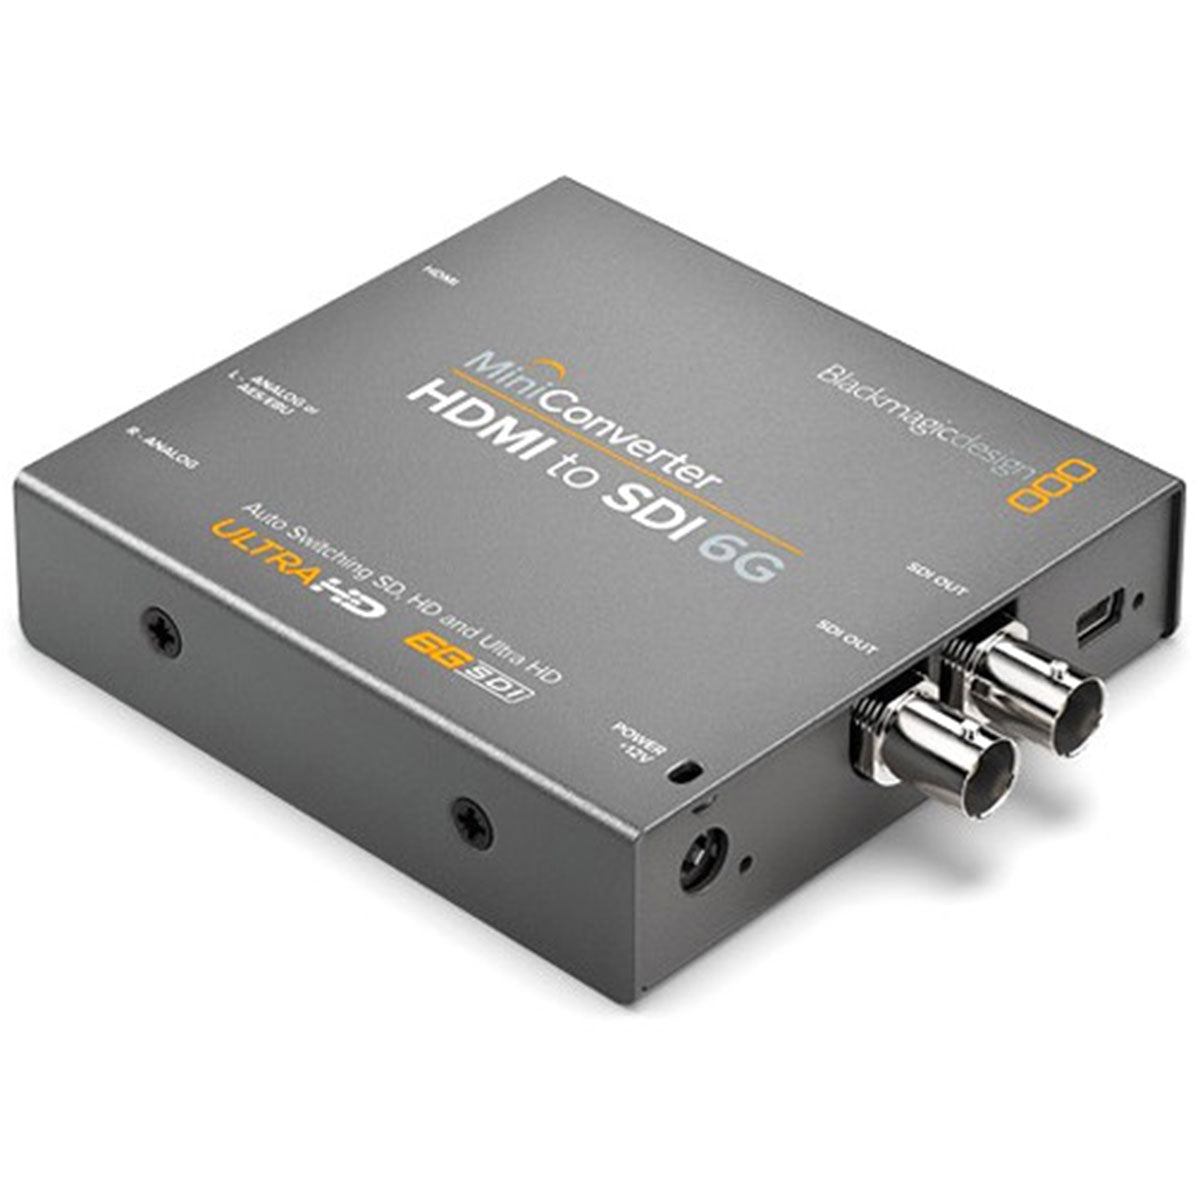 Blackmagic Design Mini Converter - HDMI to SDI 6G